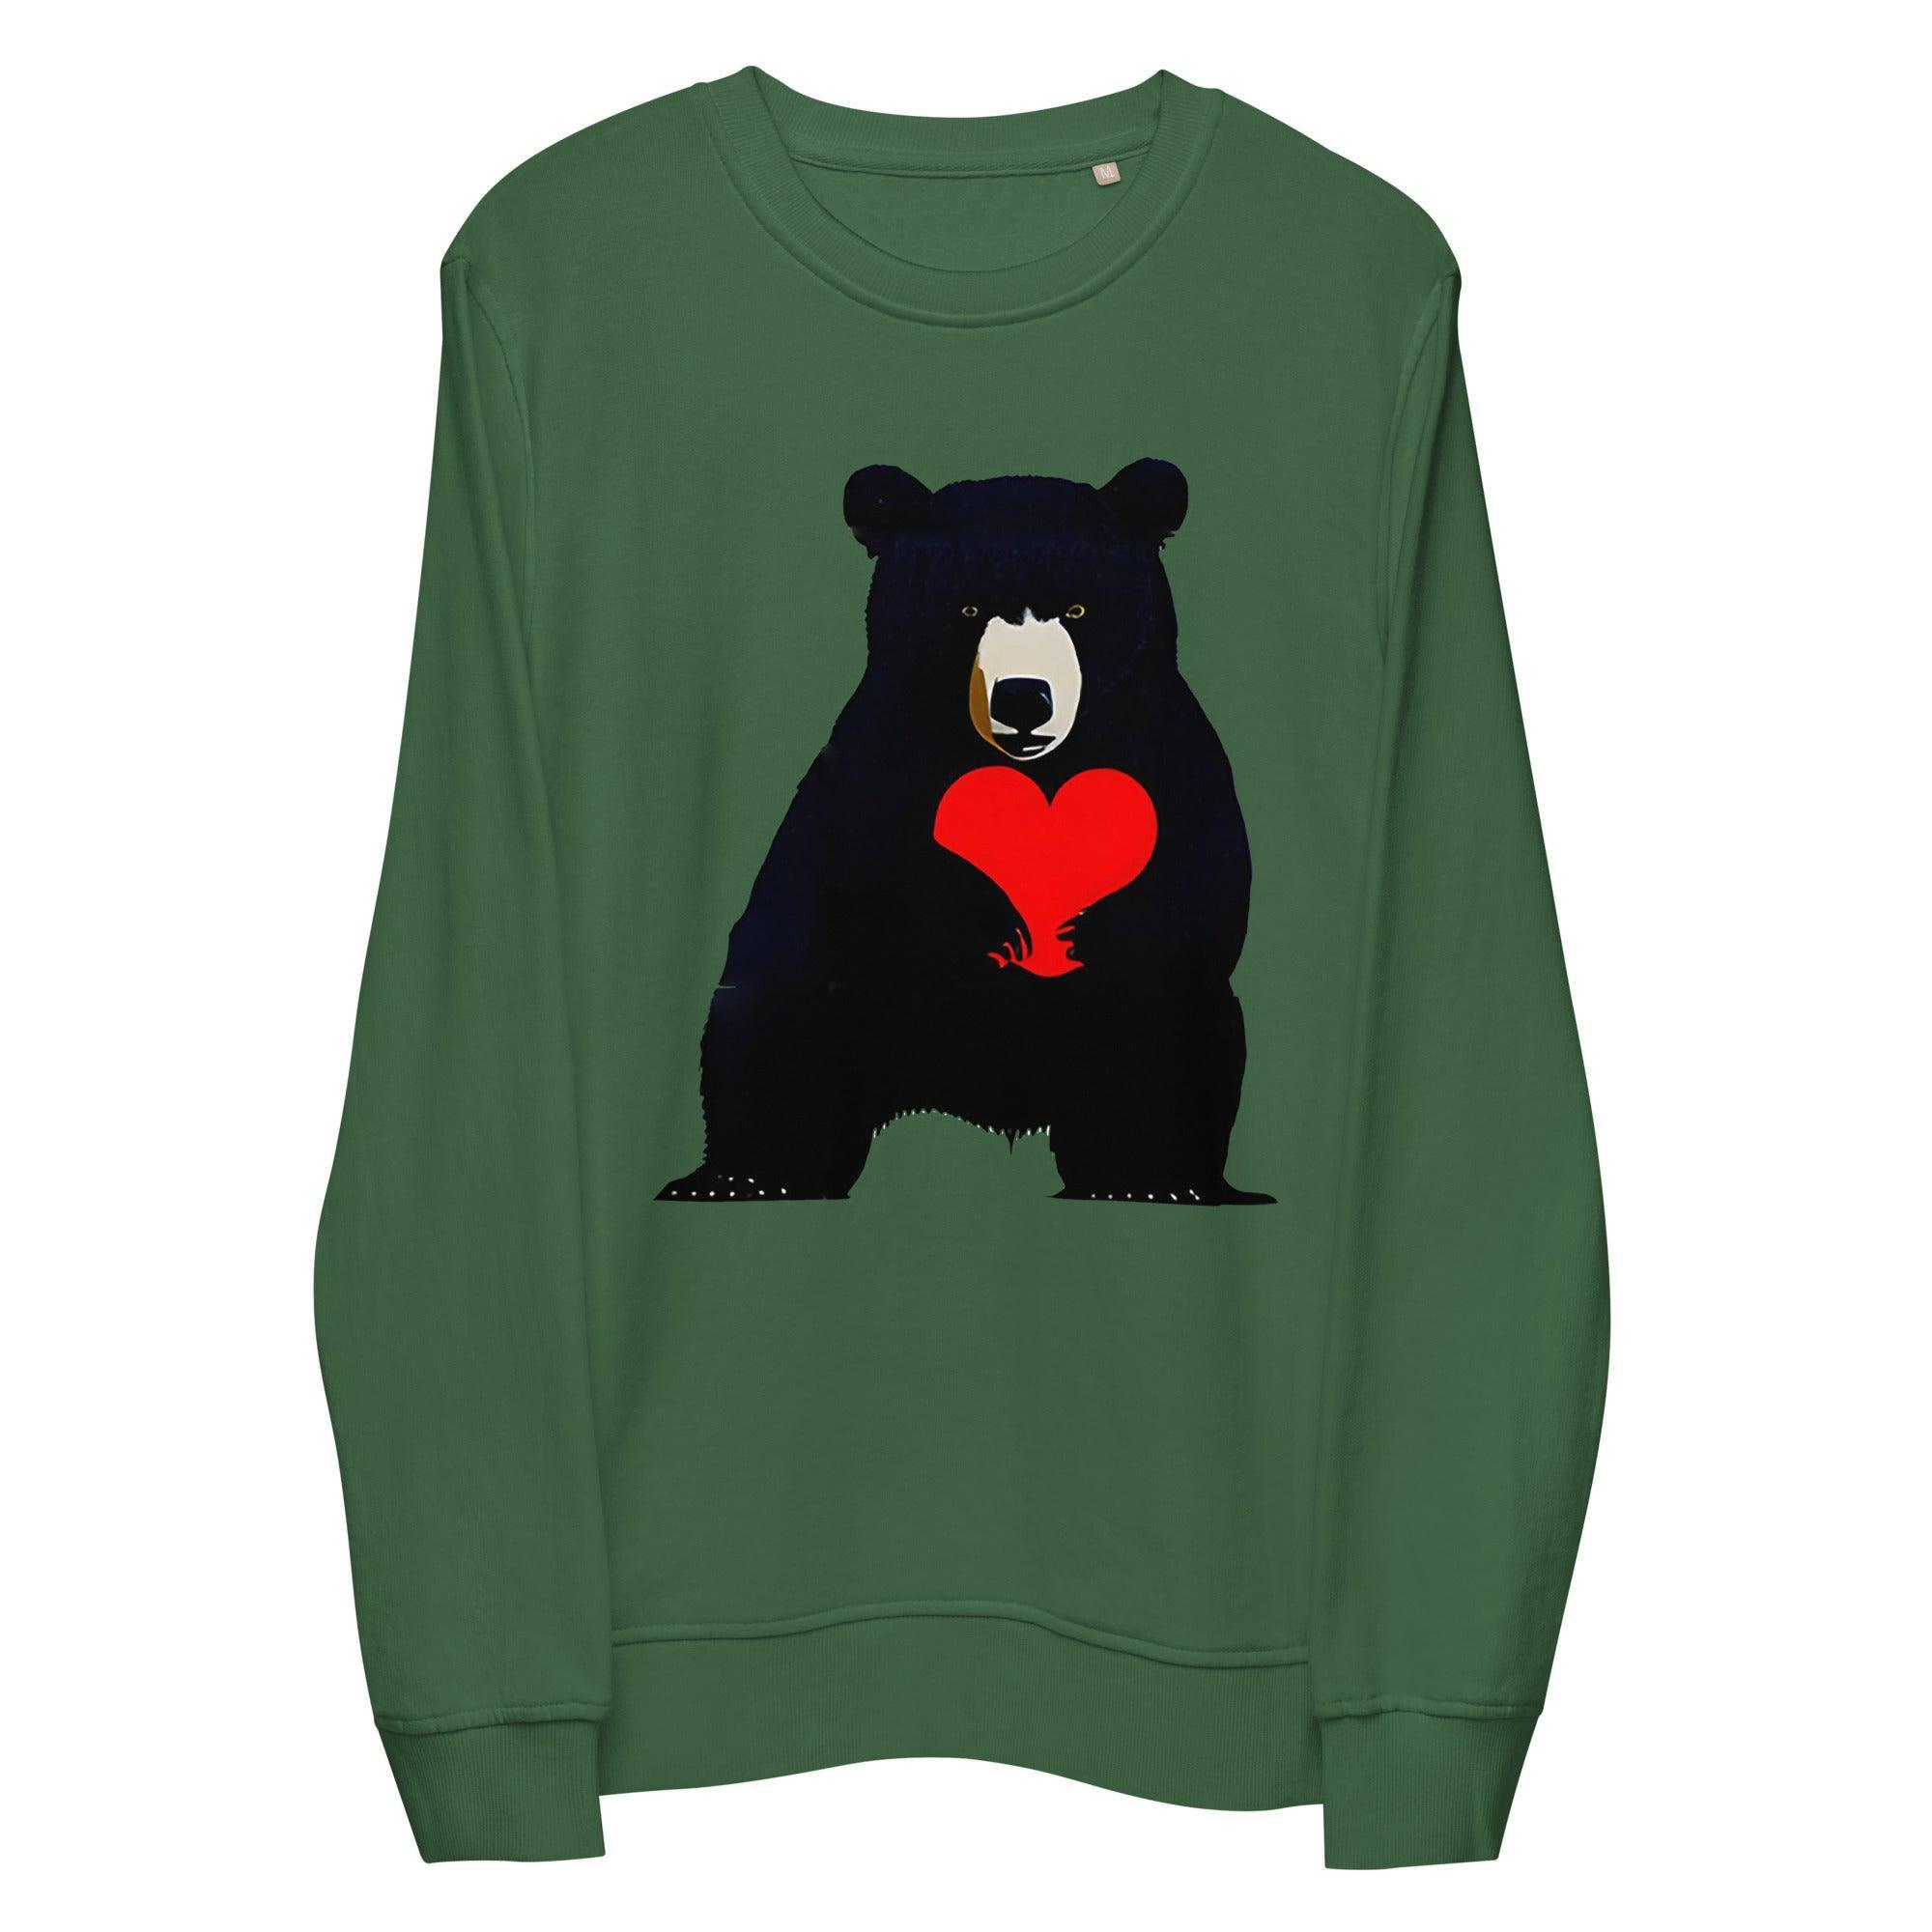 Bearish Heart Sweatshirt - InvestmenTees